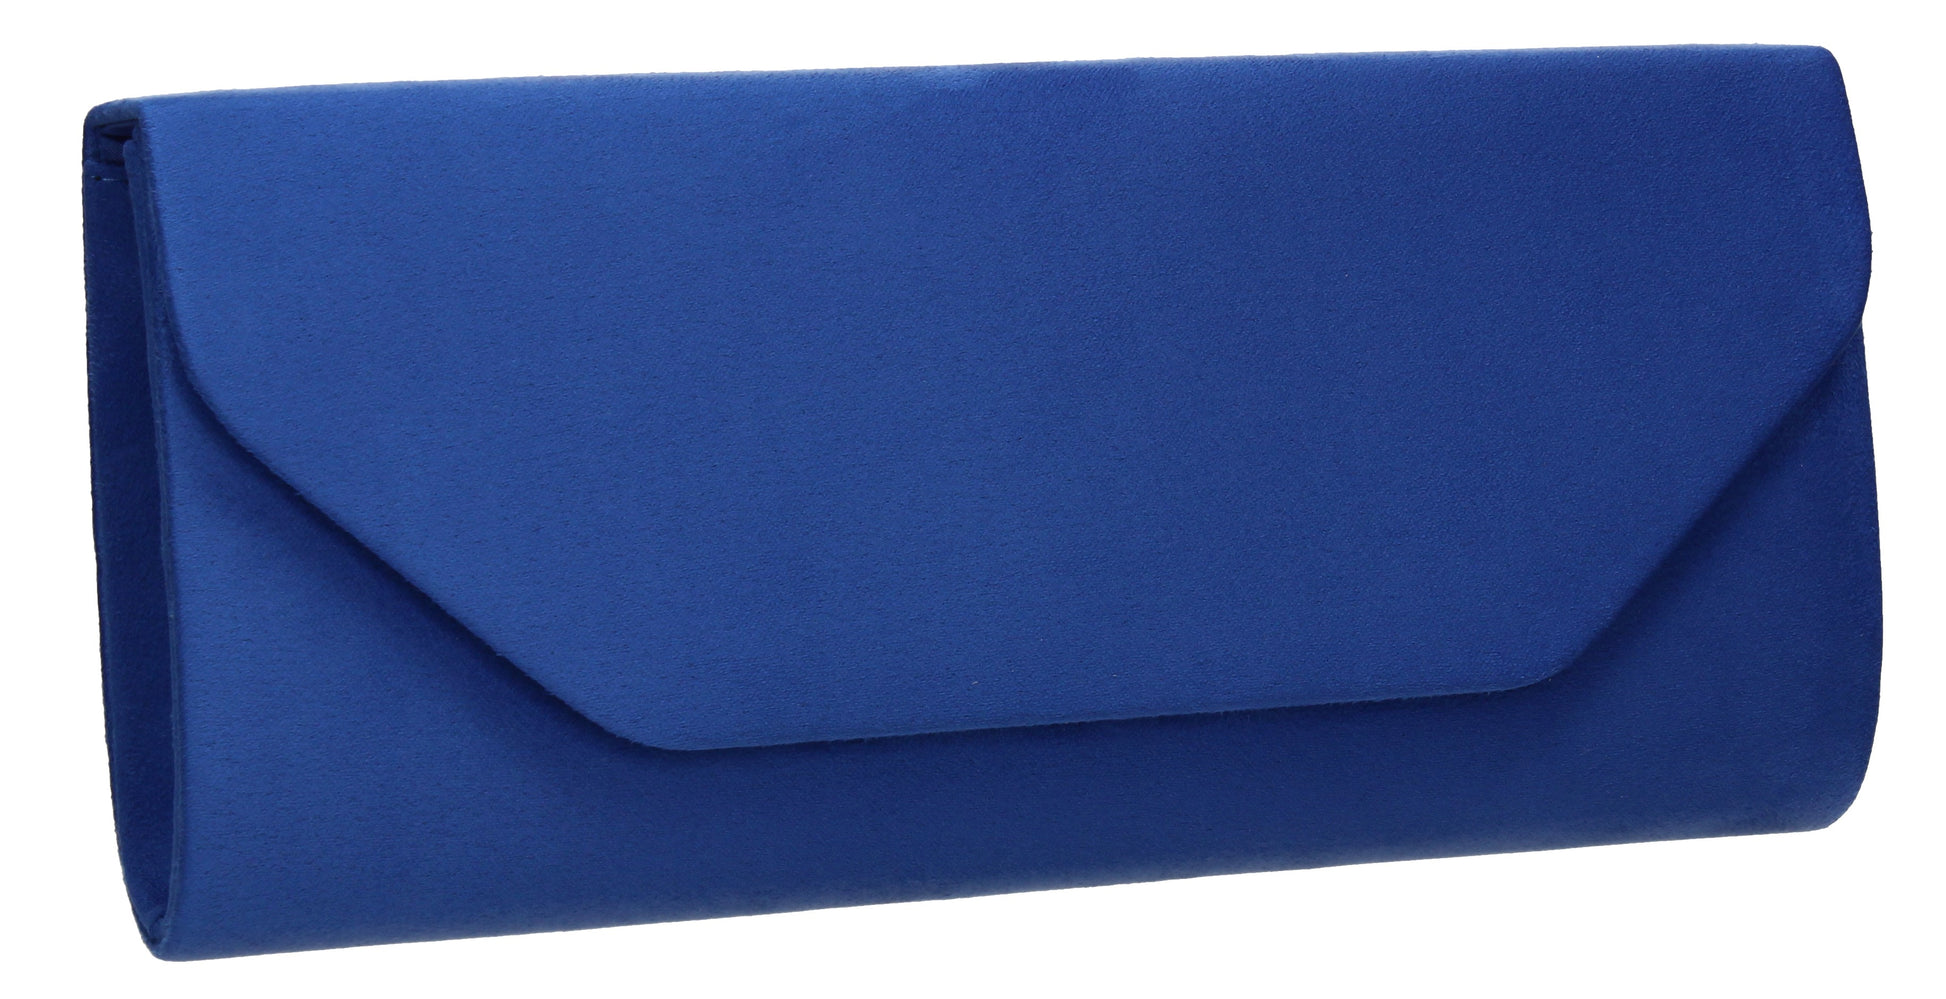 SWANKYSWANS Isabella Velvet Clutch Bag Royal Blue Cute Cheap Clutch Bag For Weddings School and Work